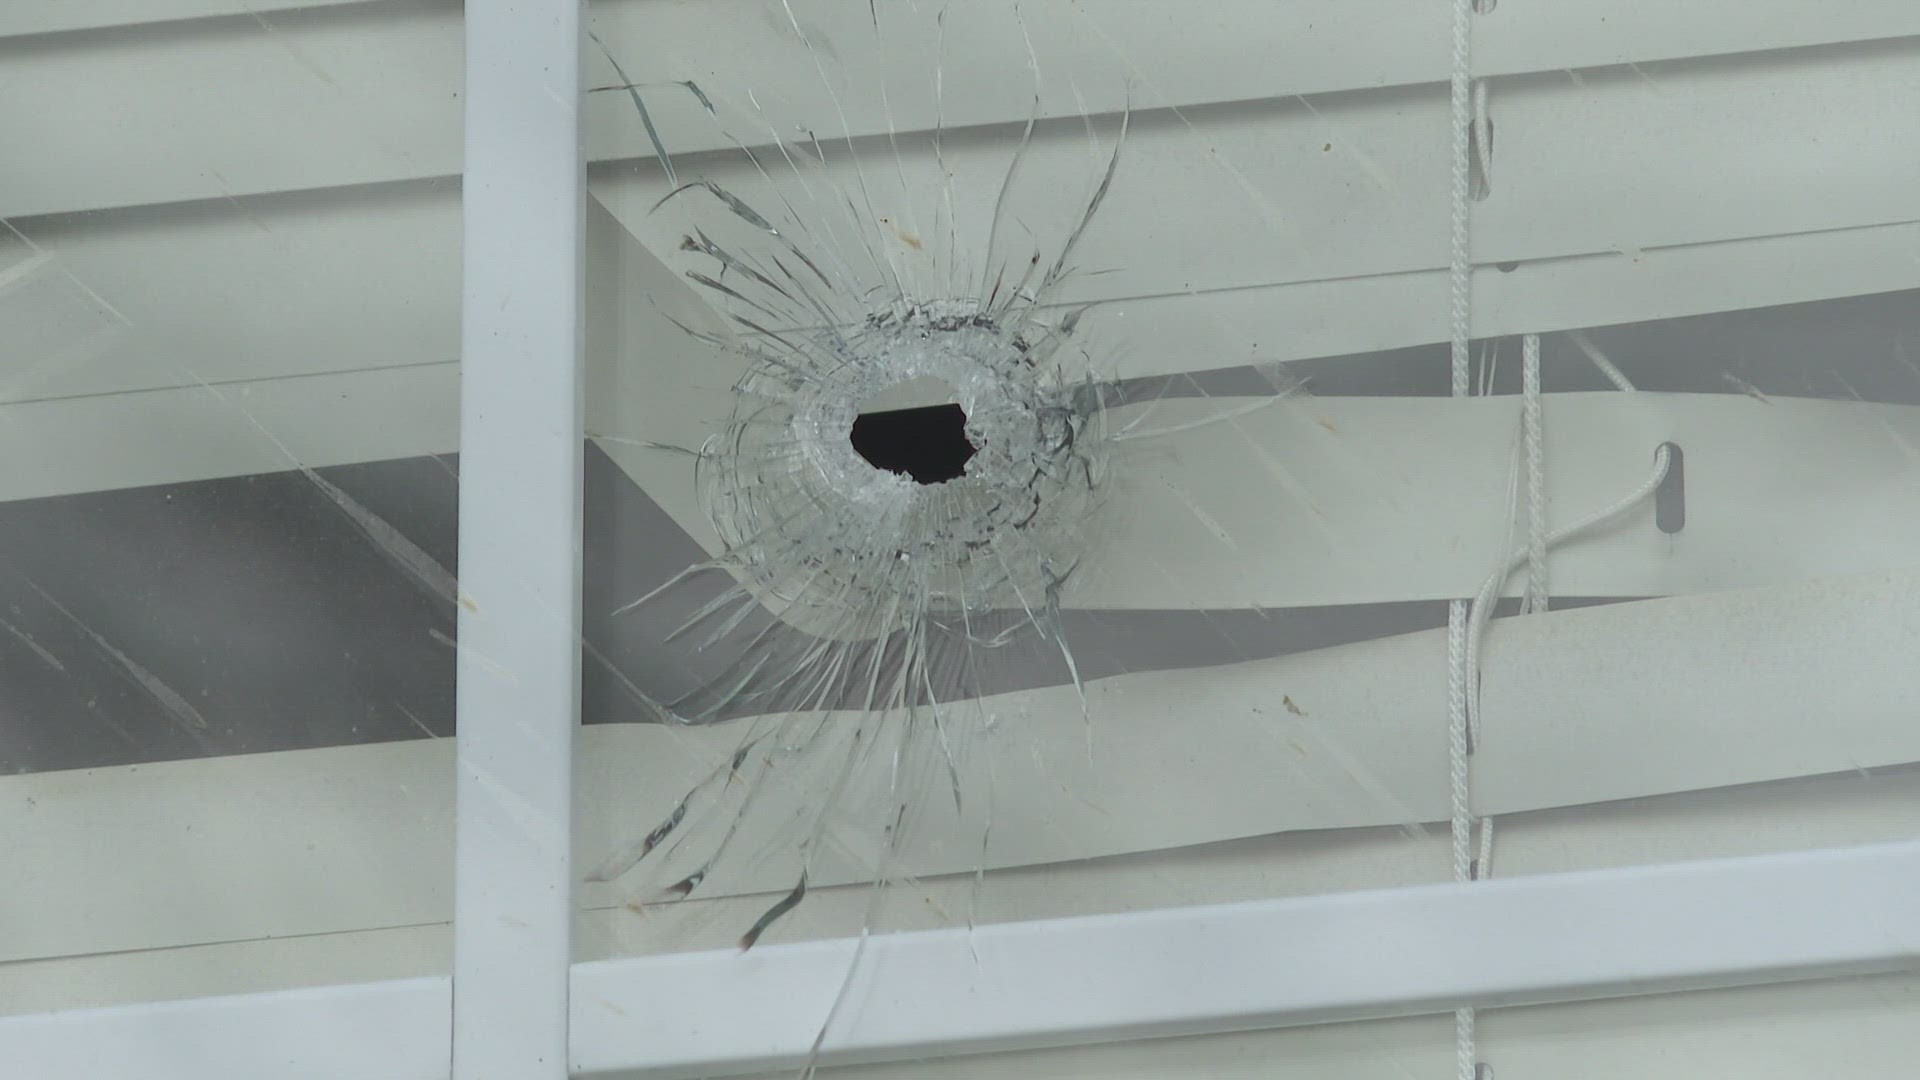 The bullets hit three homes near Berryman and Calvert Streets